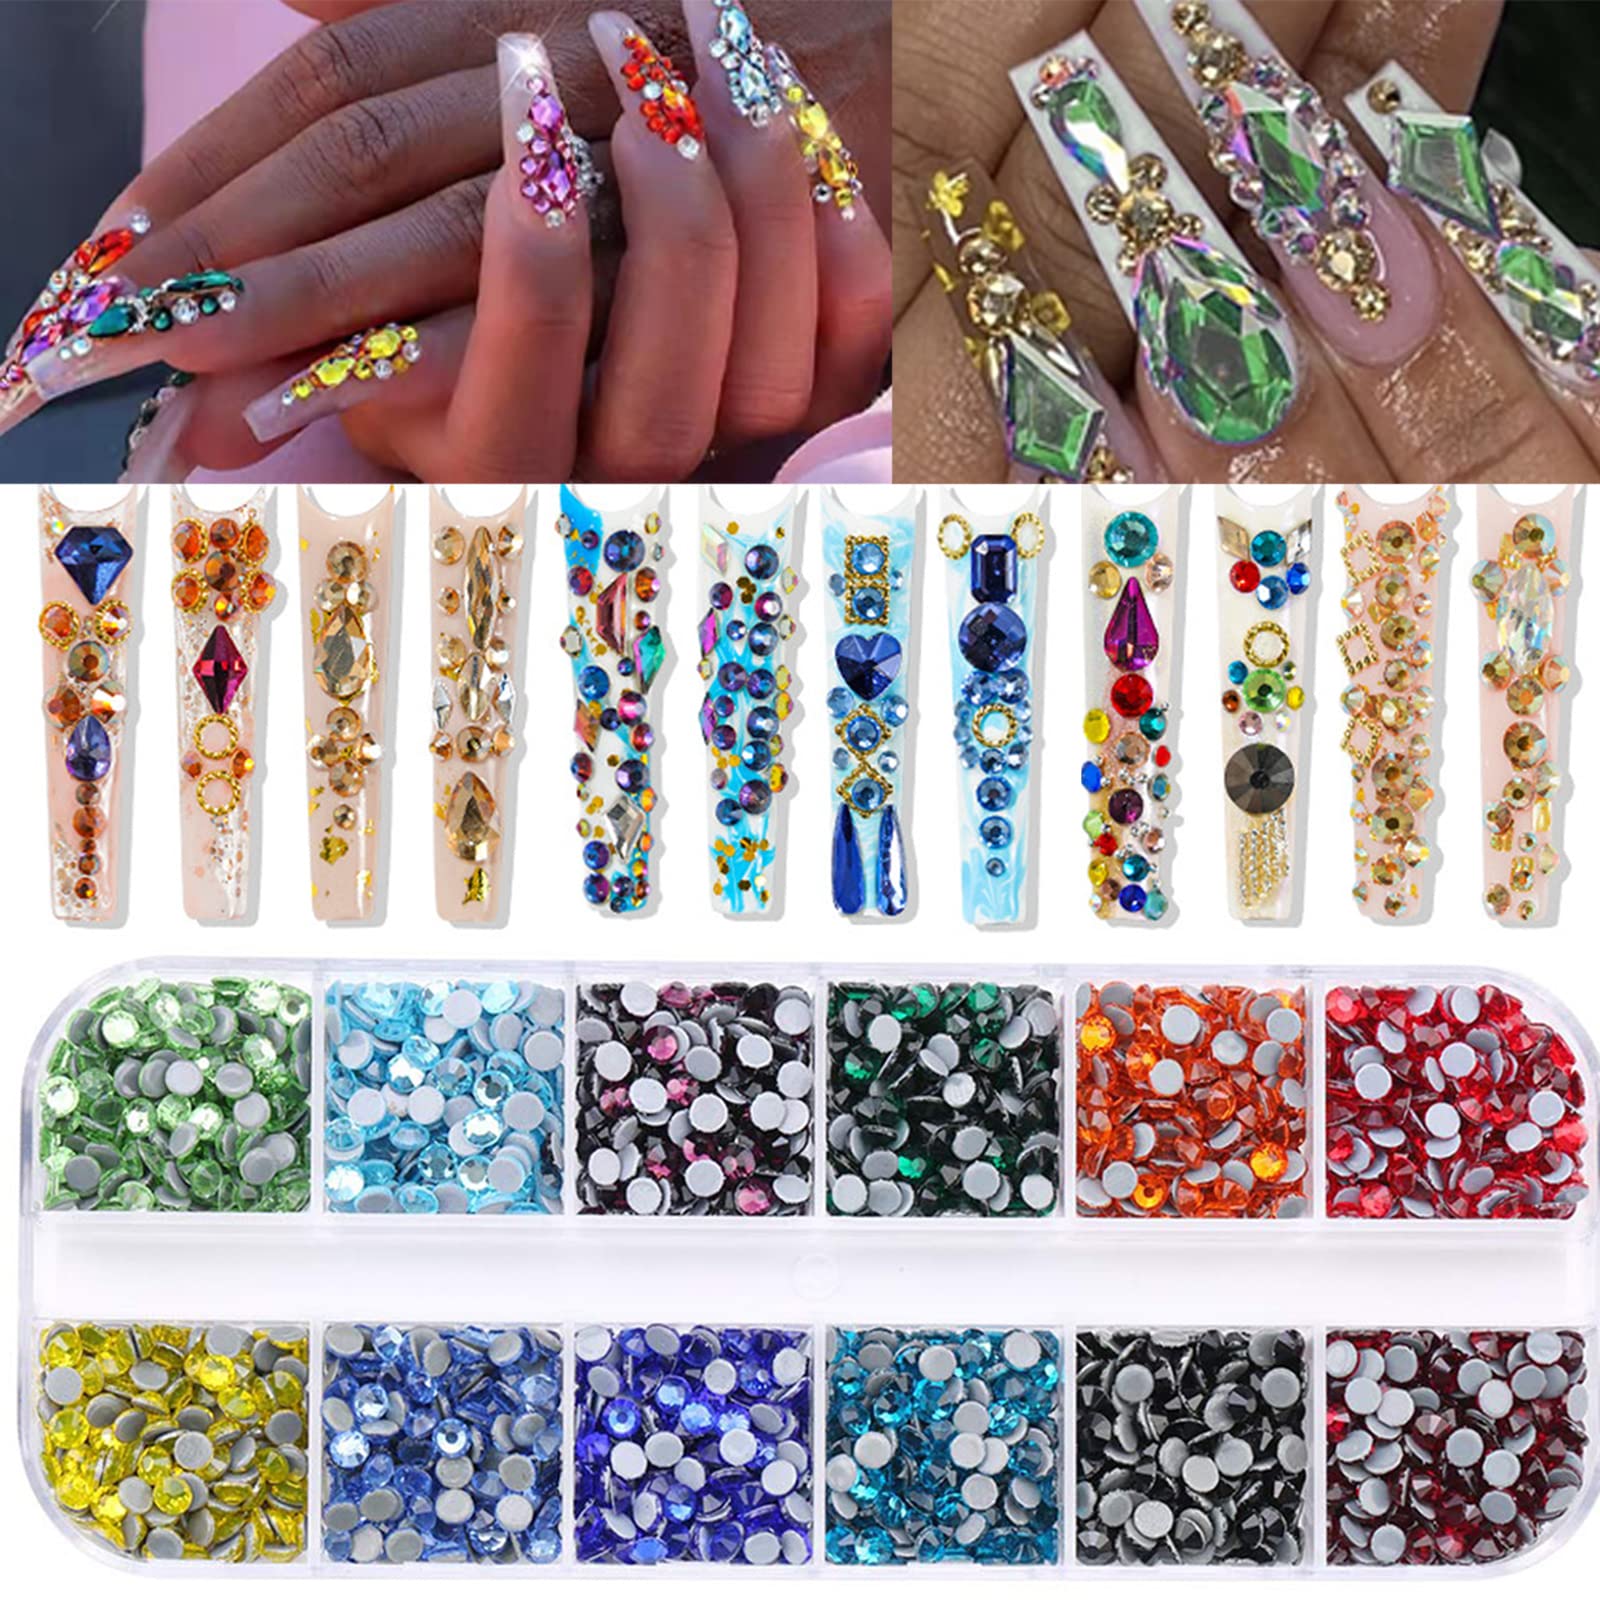 Nail Gems with Crystals Rhinestones, Nail Art Supplies Diamond Nails Stones  for Nails Decoration Makeup - style 4